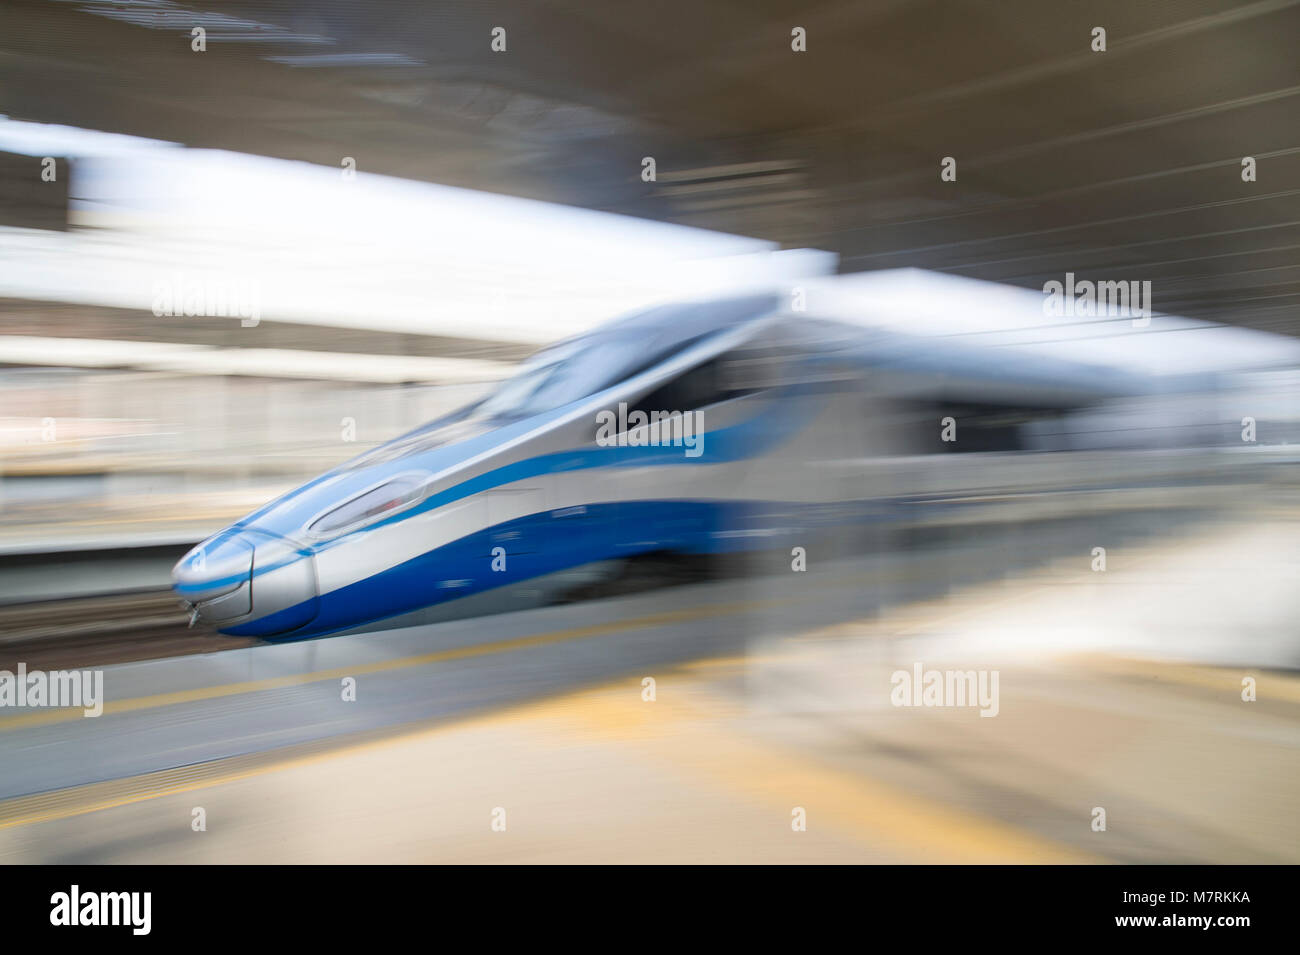 Pendolino high speed train in Gdansk, Poland. March 11th 2018 © Wojciech Strozyk / Alamy Stock Photo Stock Photo